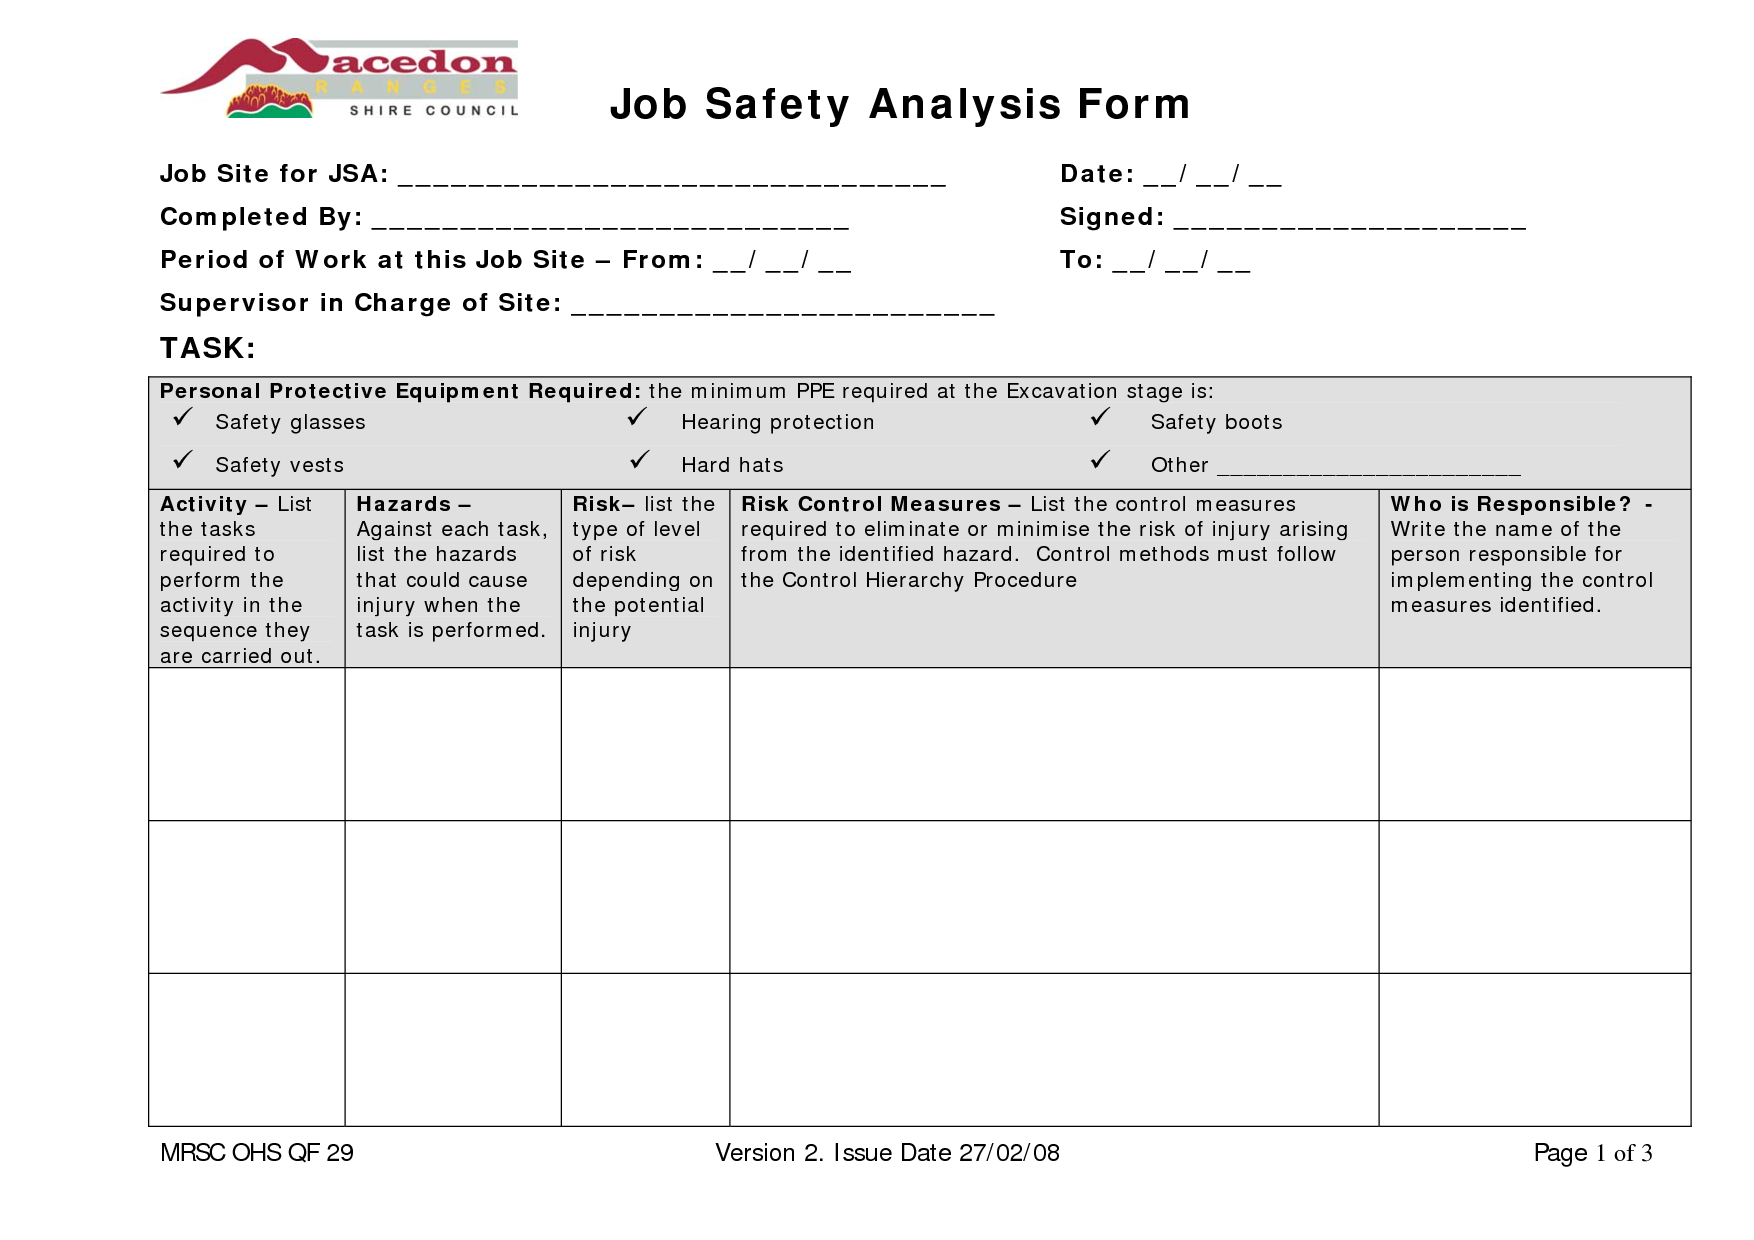 Job Safety Analysis Form Image